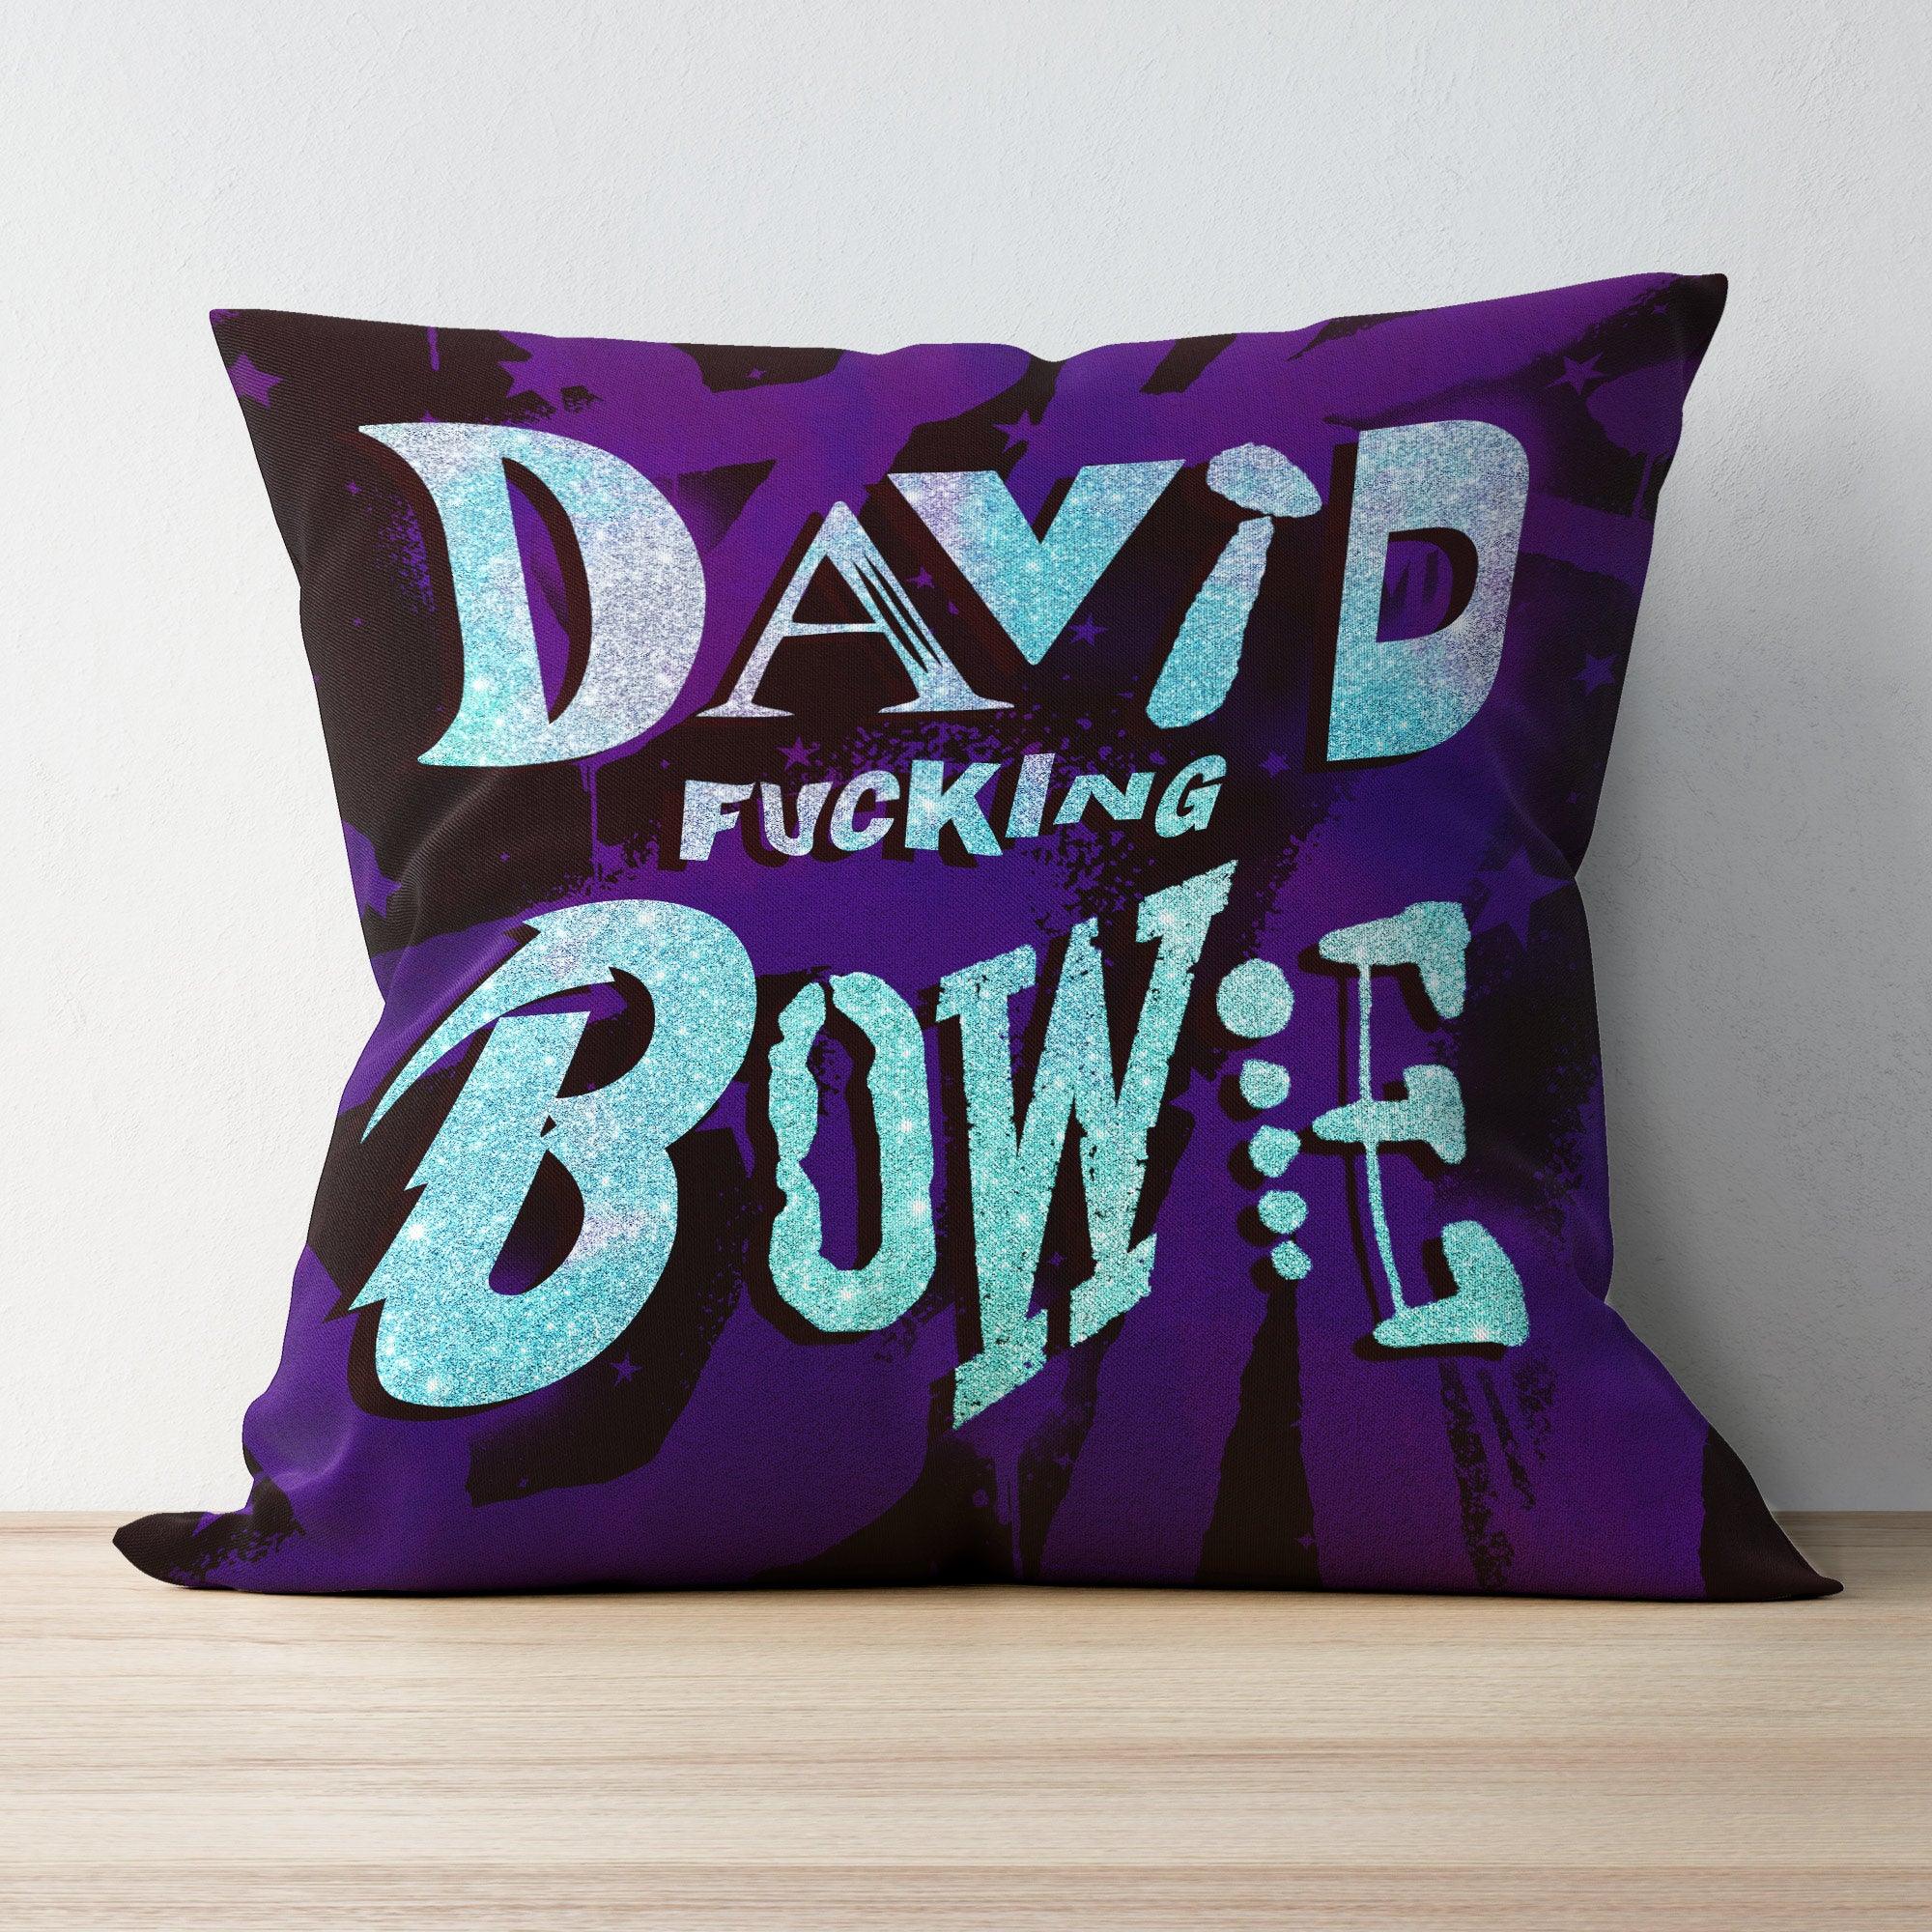 David Bowie cushion